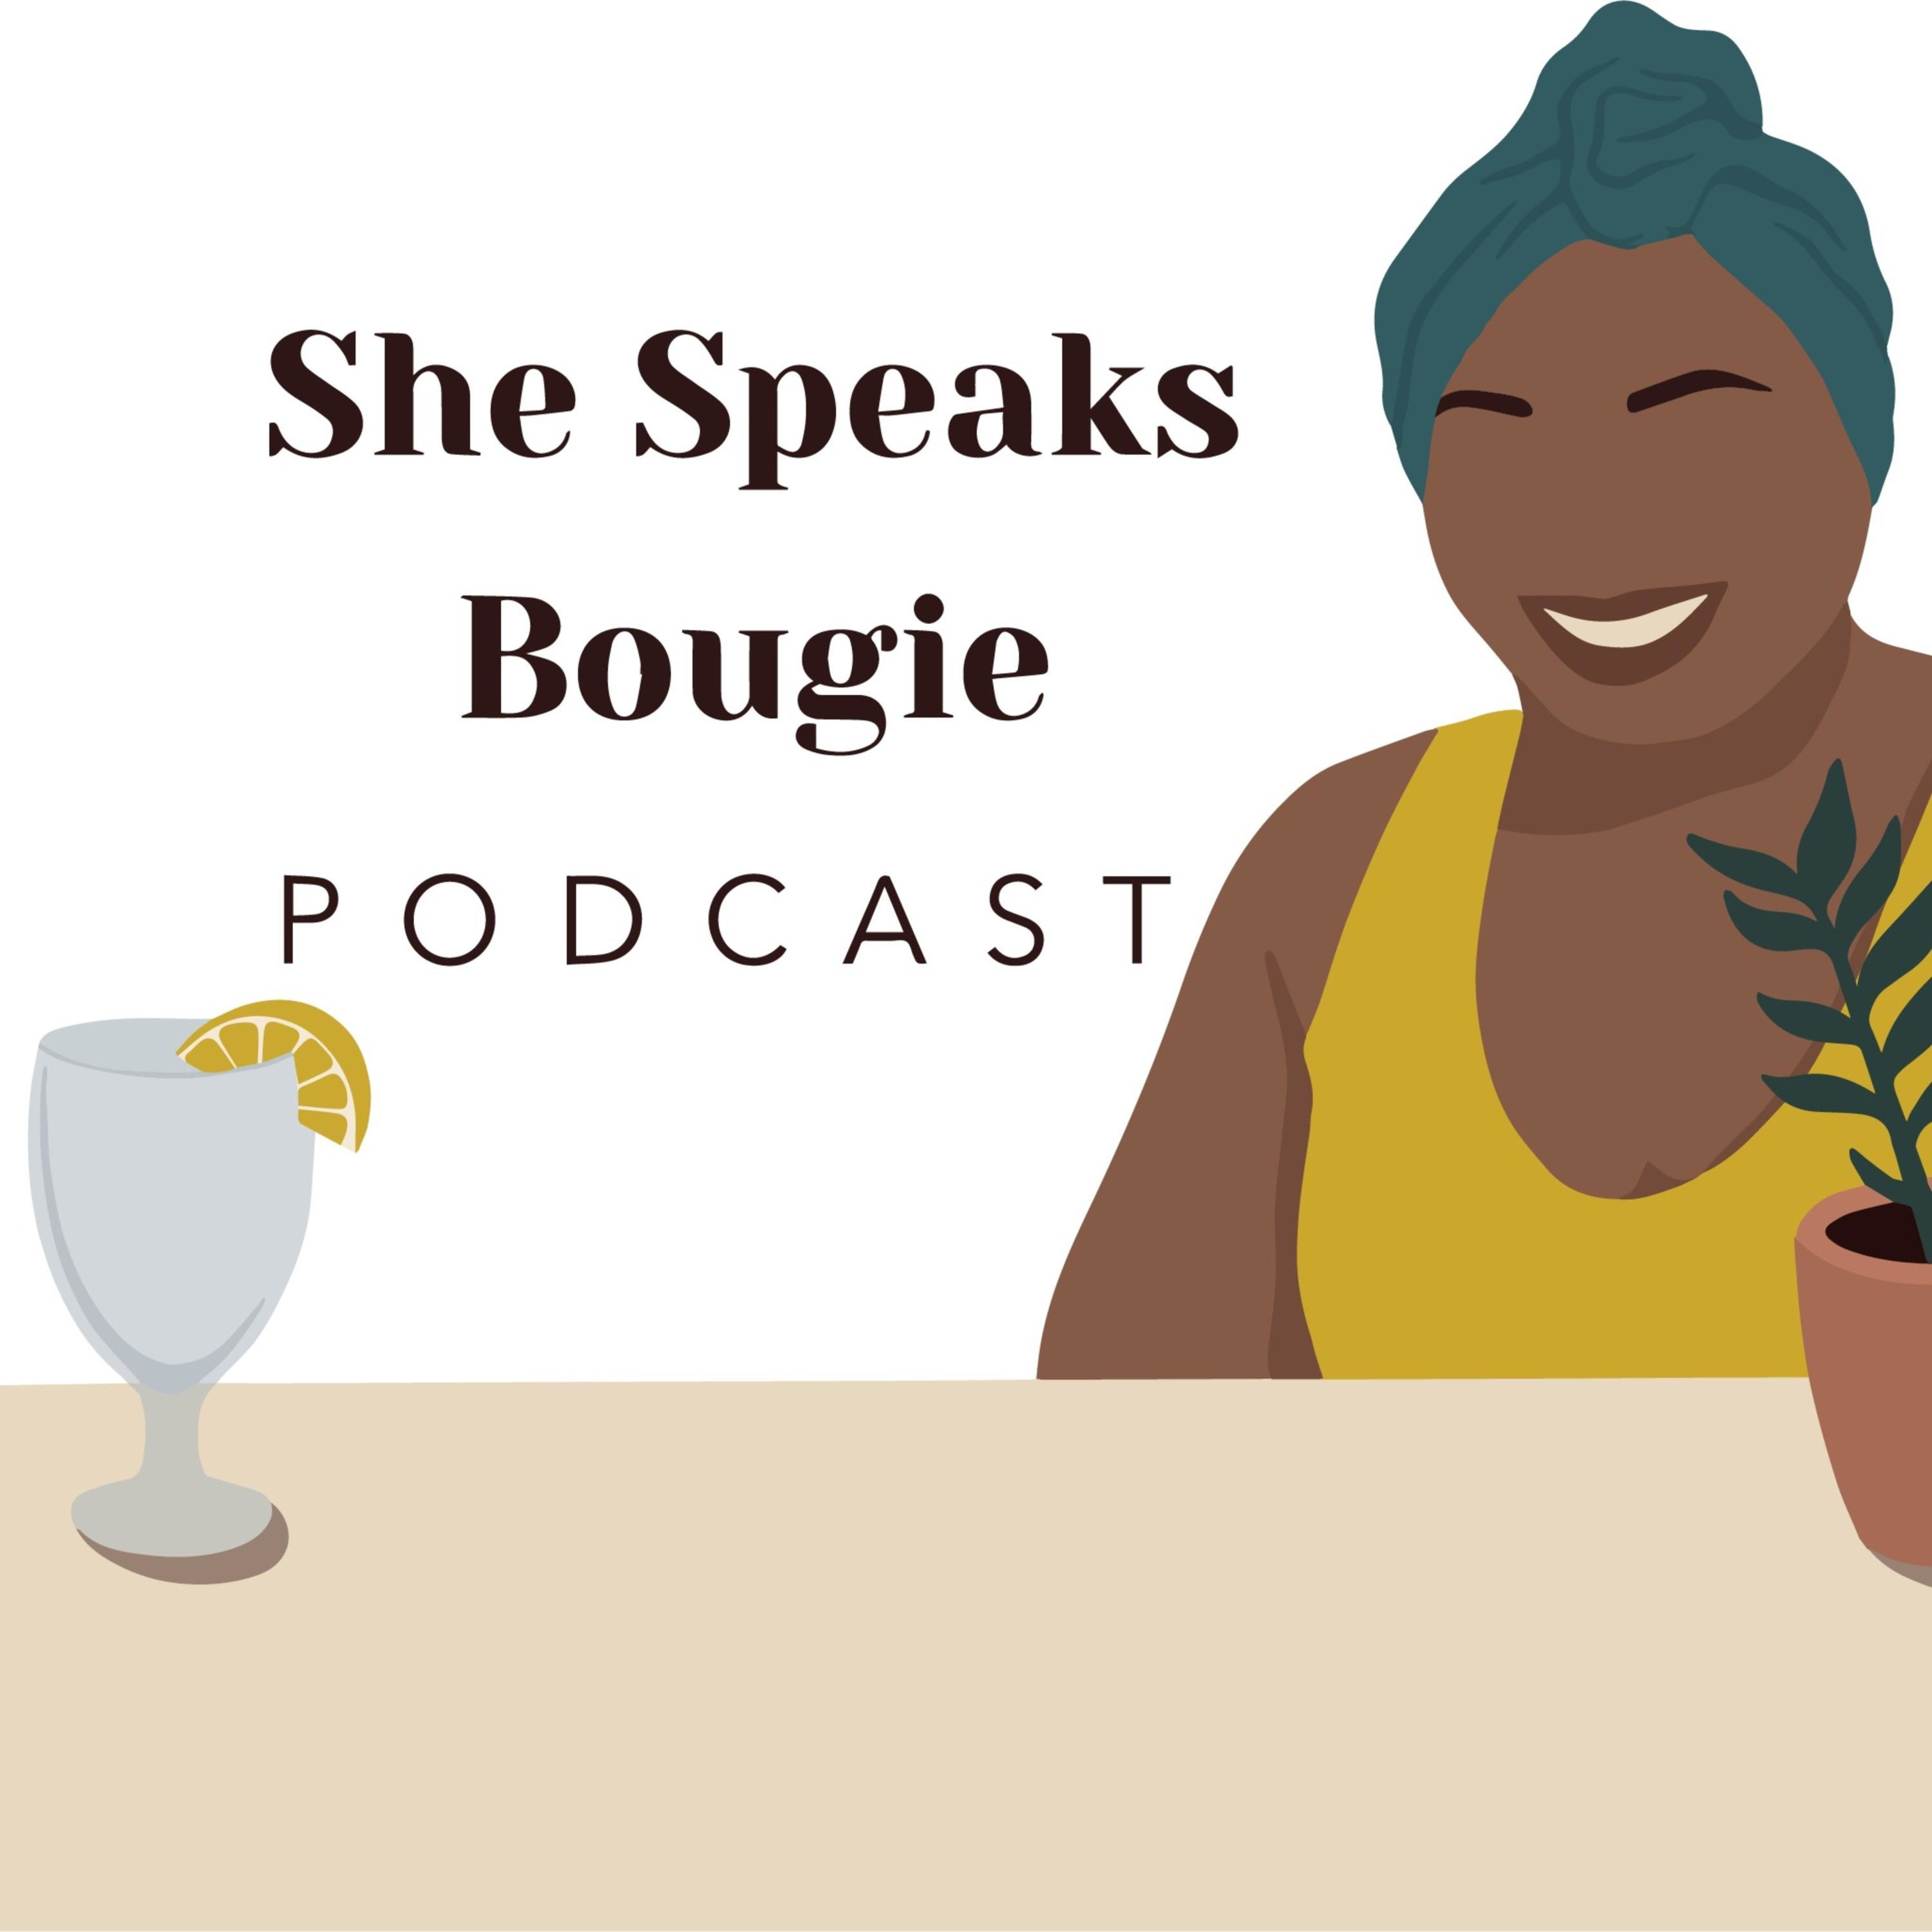 She Speaks Bougie Podcast